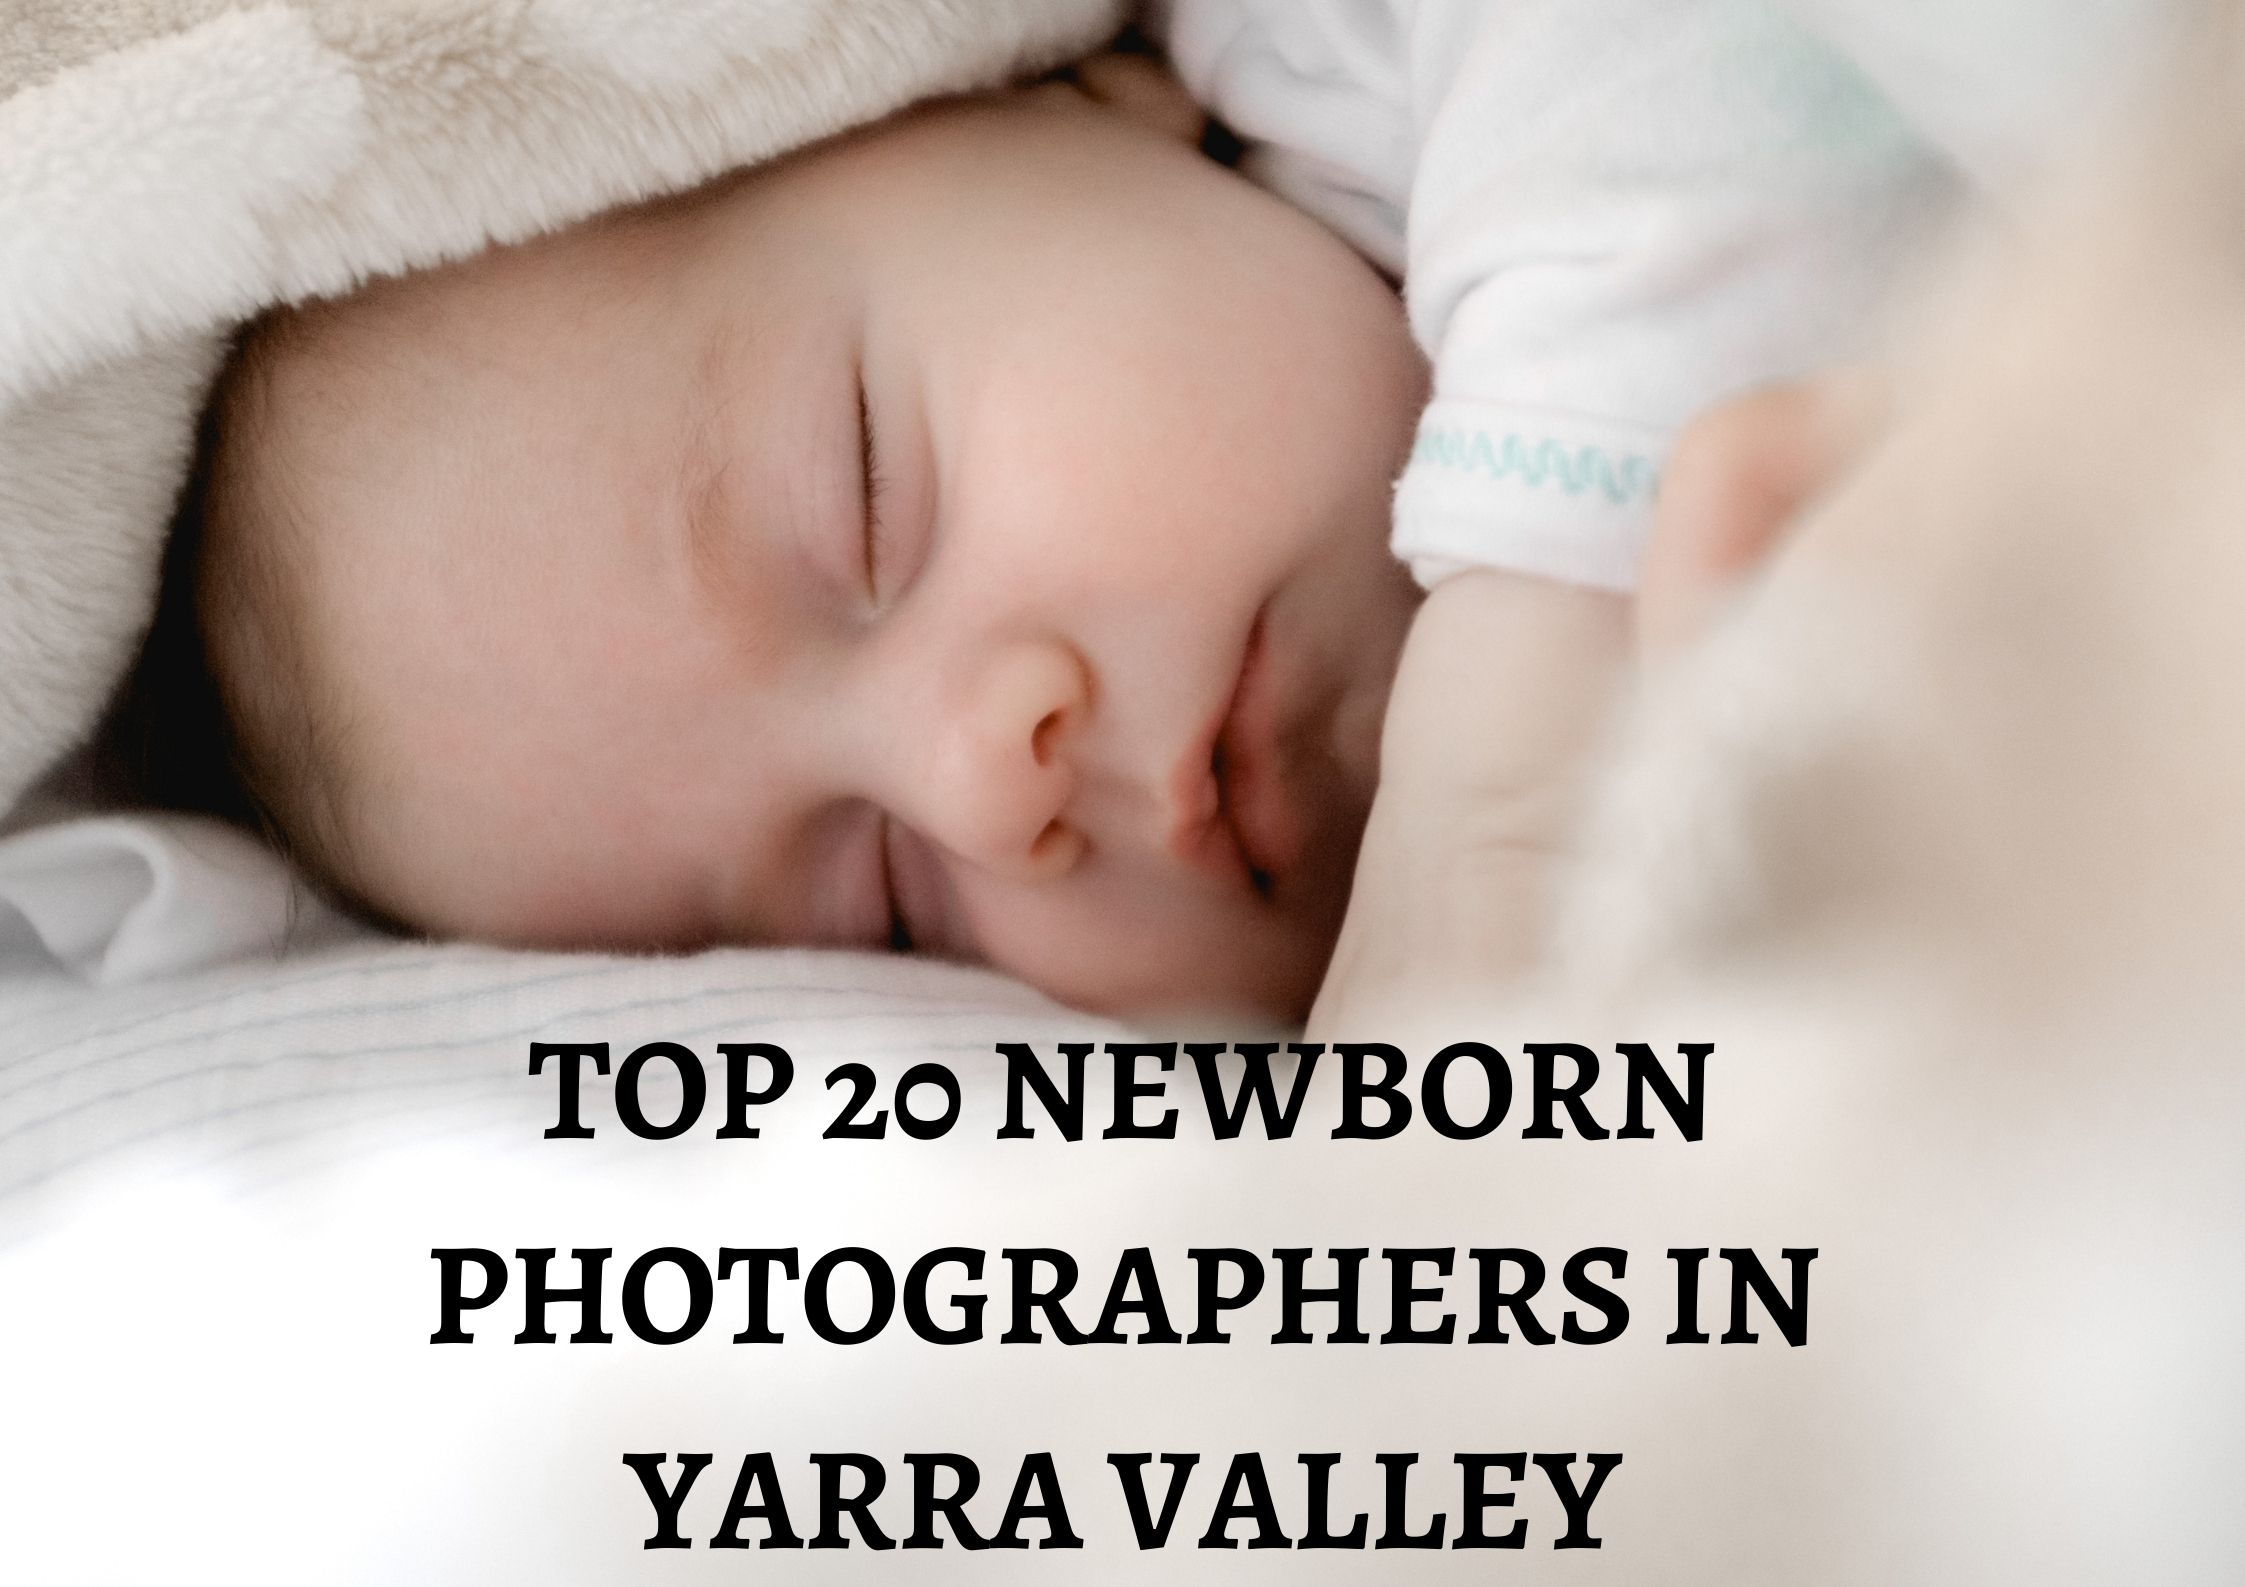 TOP 20 NEWBORN PHOTOGRAPHERS IN YARRA VALLEY